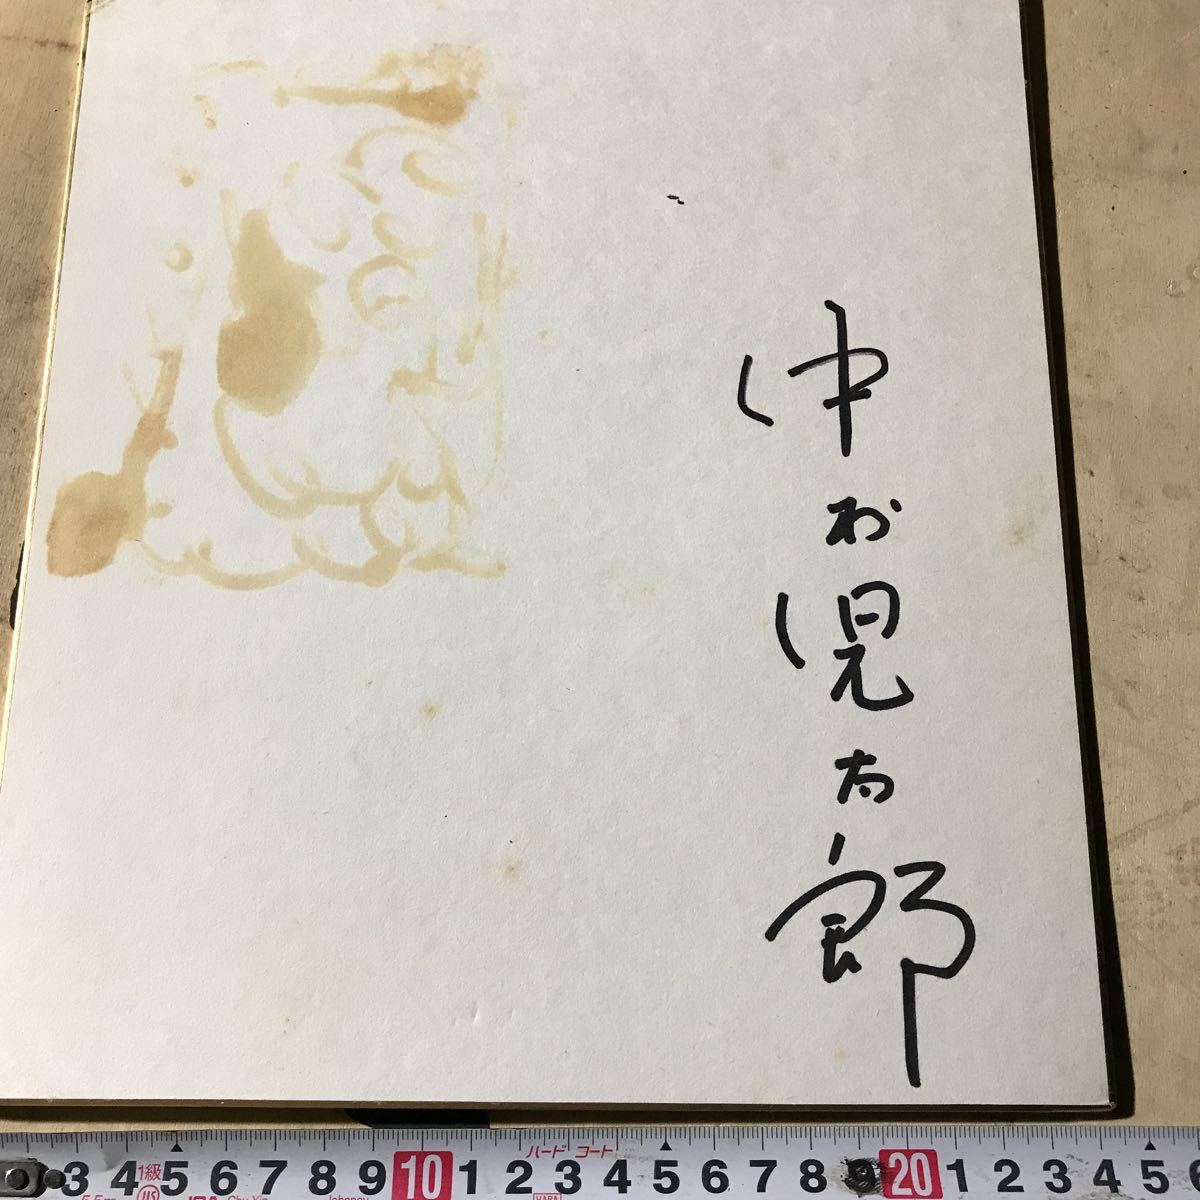  Nakamura small Taro. autograph autograph 